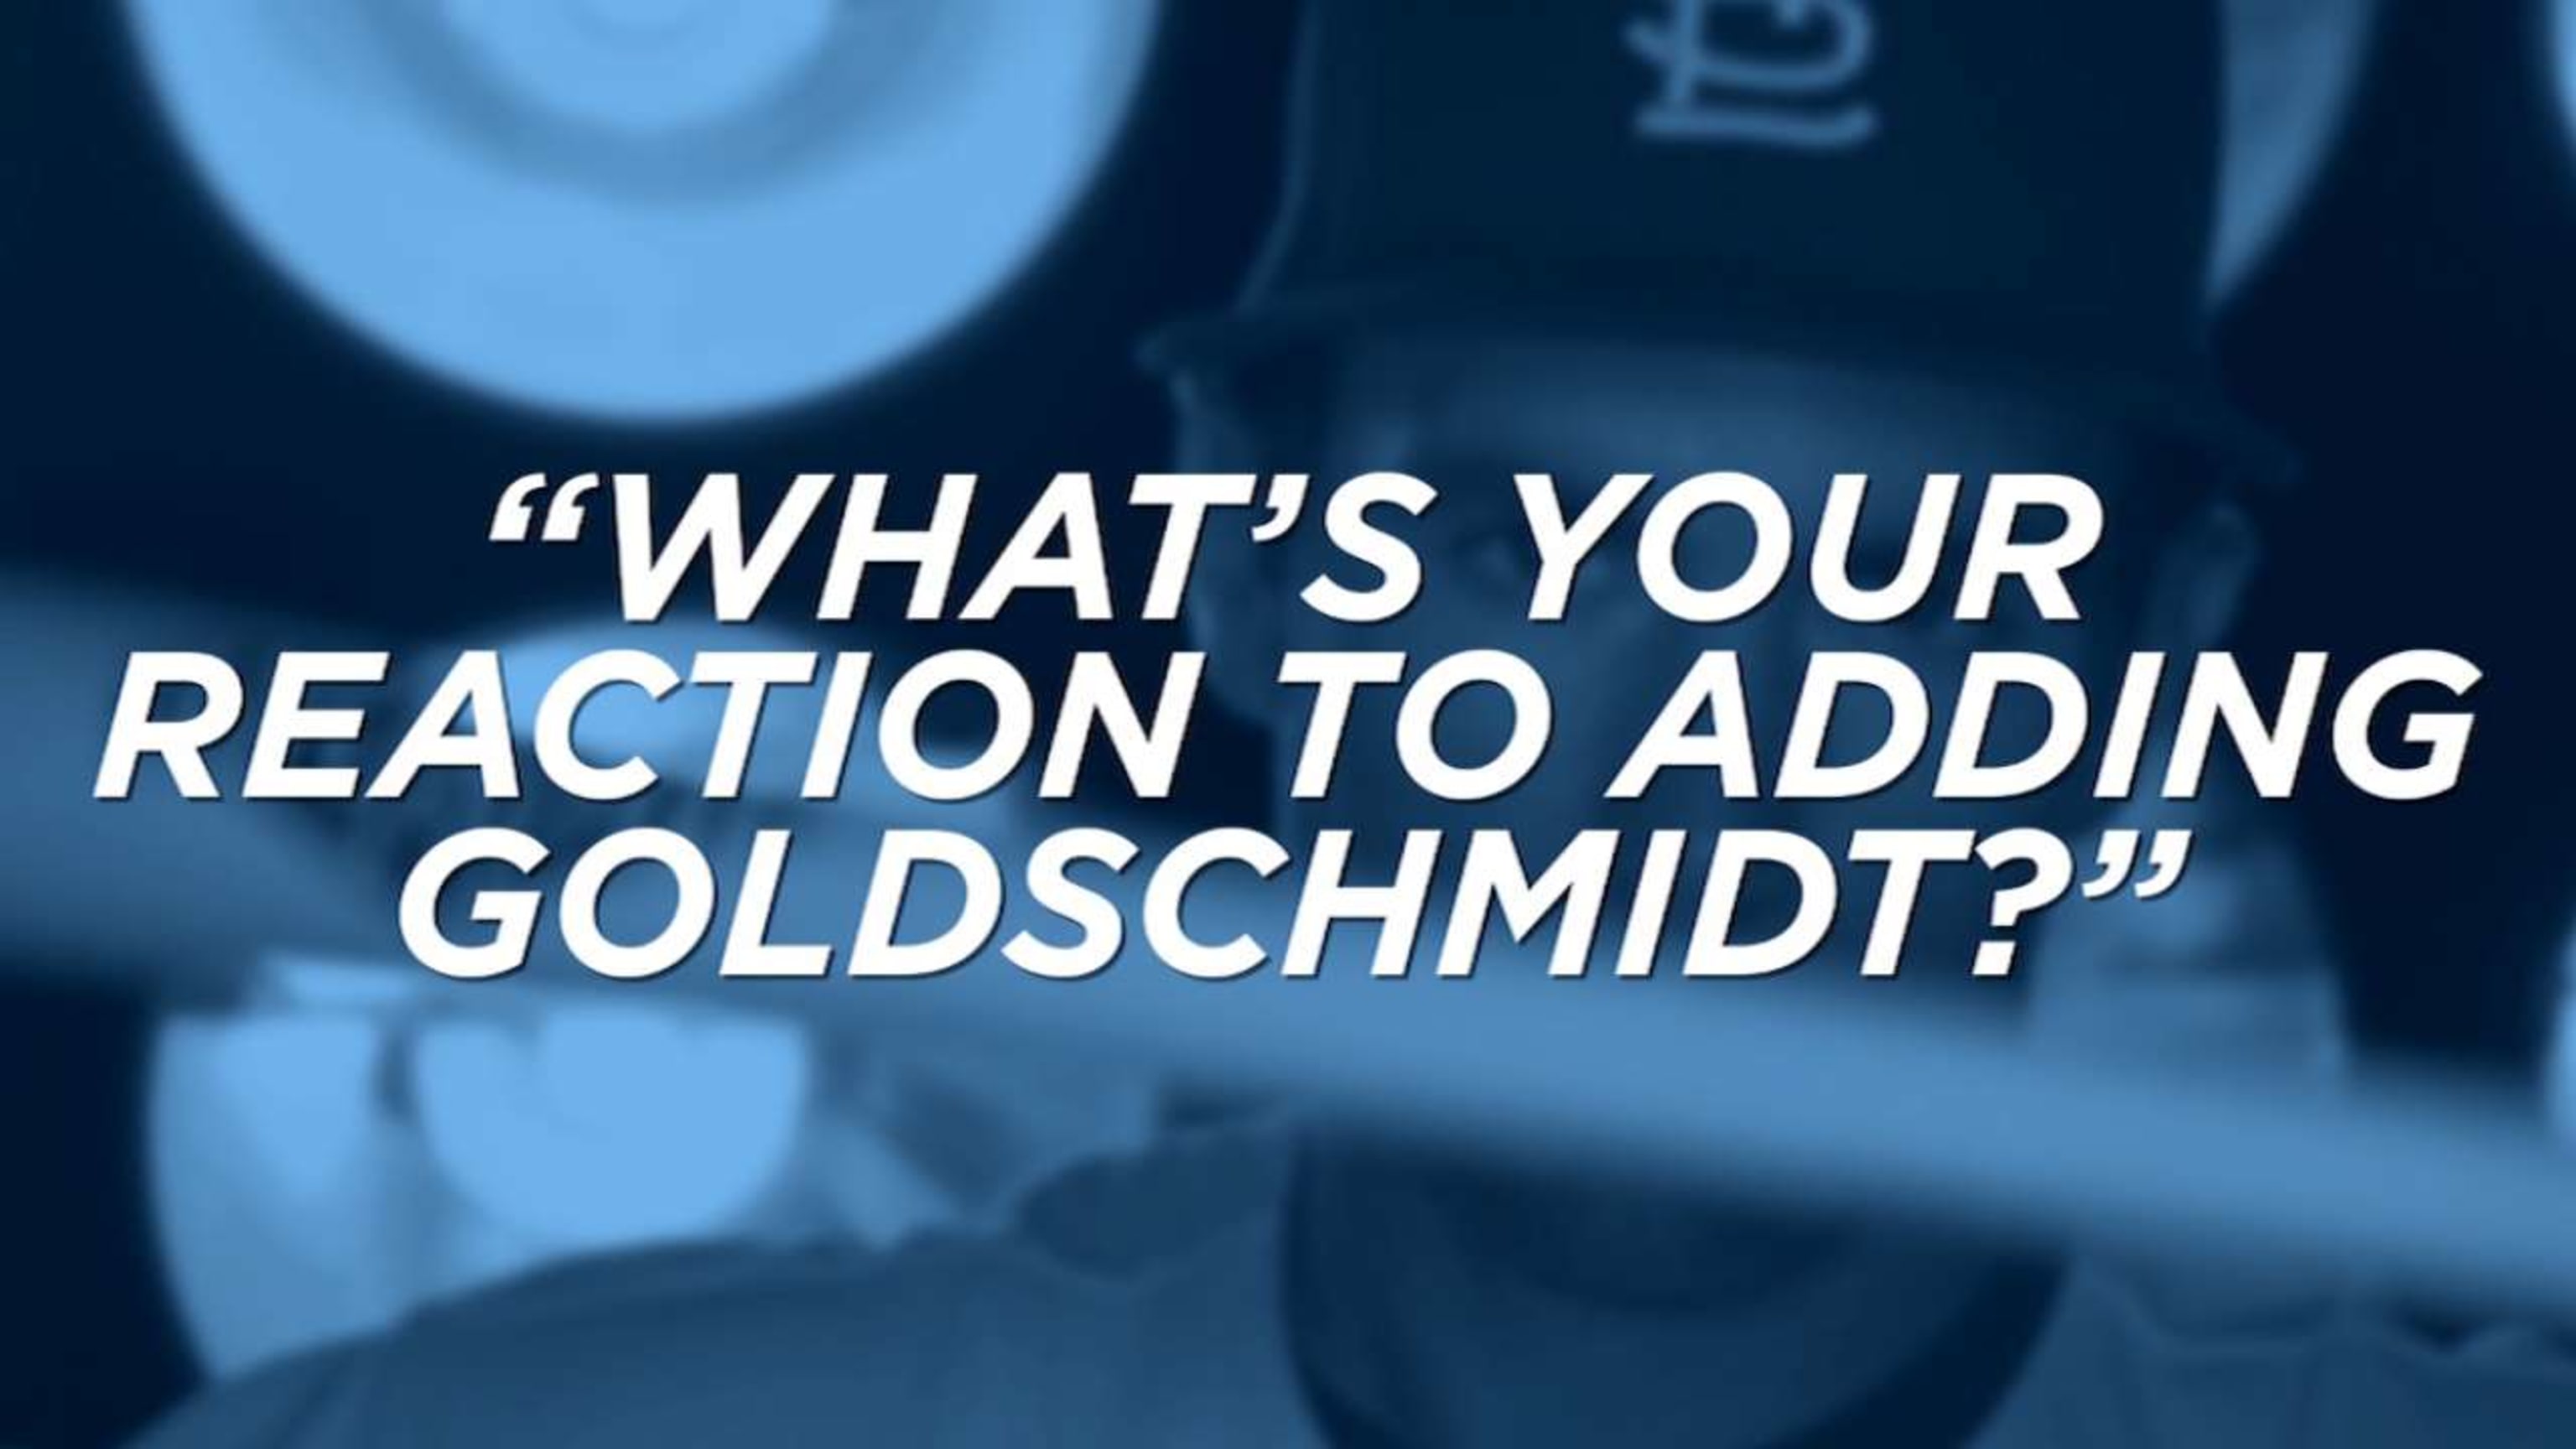 Paul Goldschmidt: Cardinals sign first baseman to contract extension